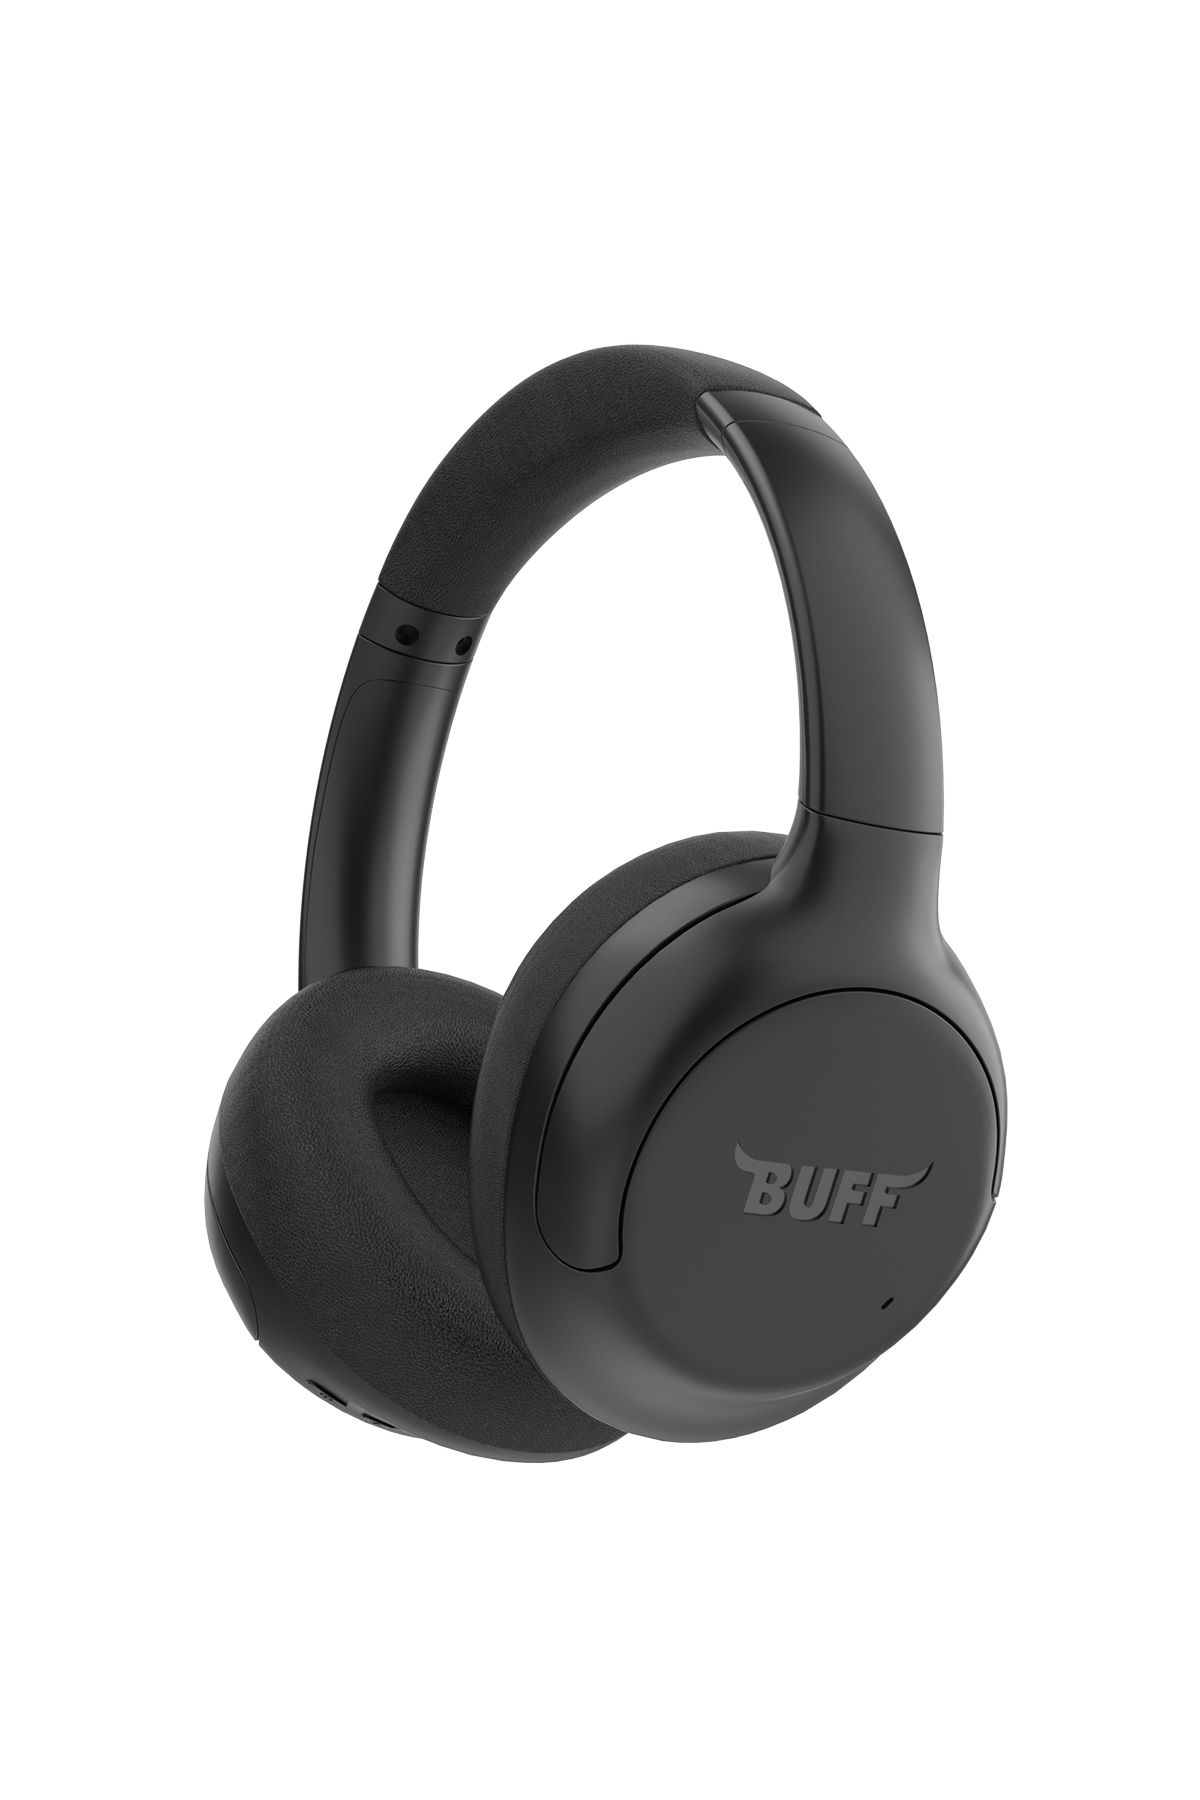 Buff Labs Buff Rubound BF15 Bluetooth Kulaküstü Kablosuz Kulaklık